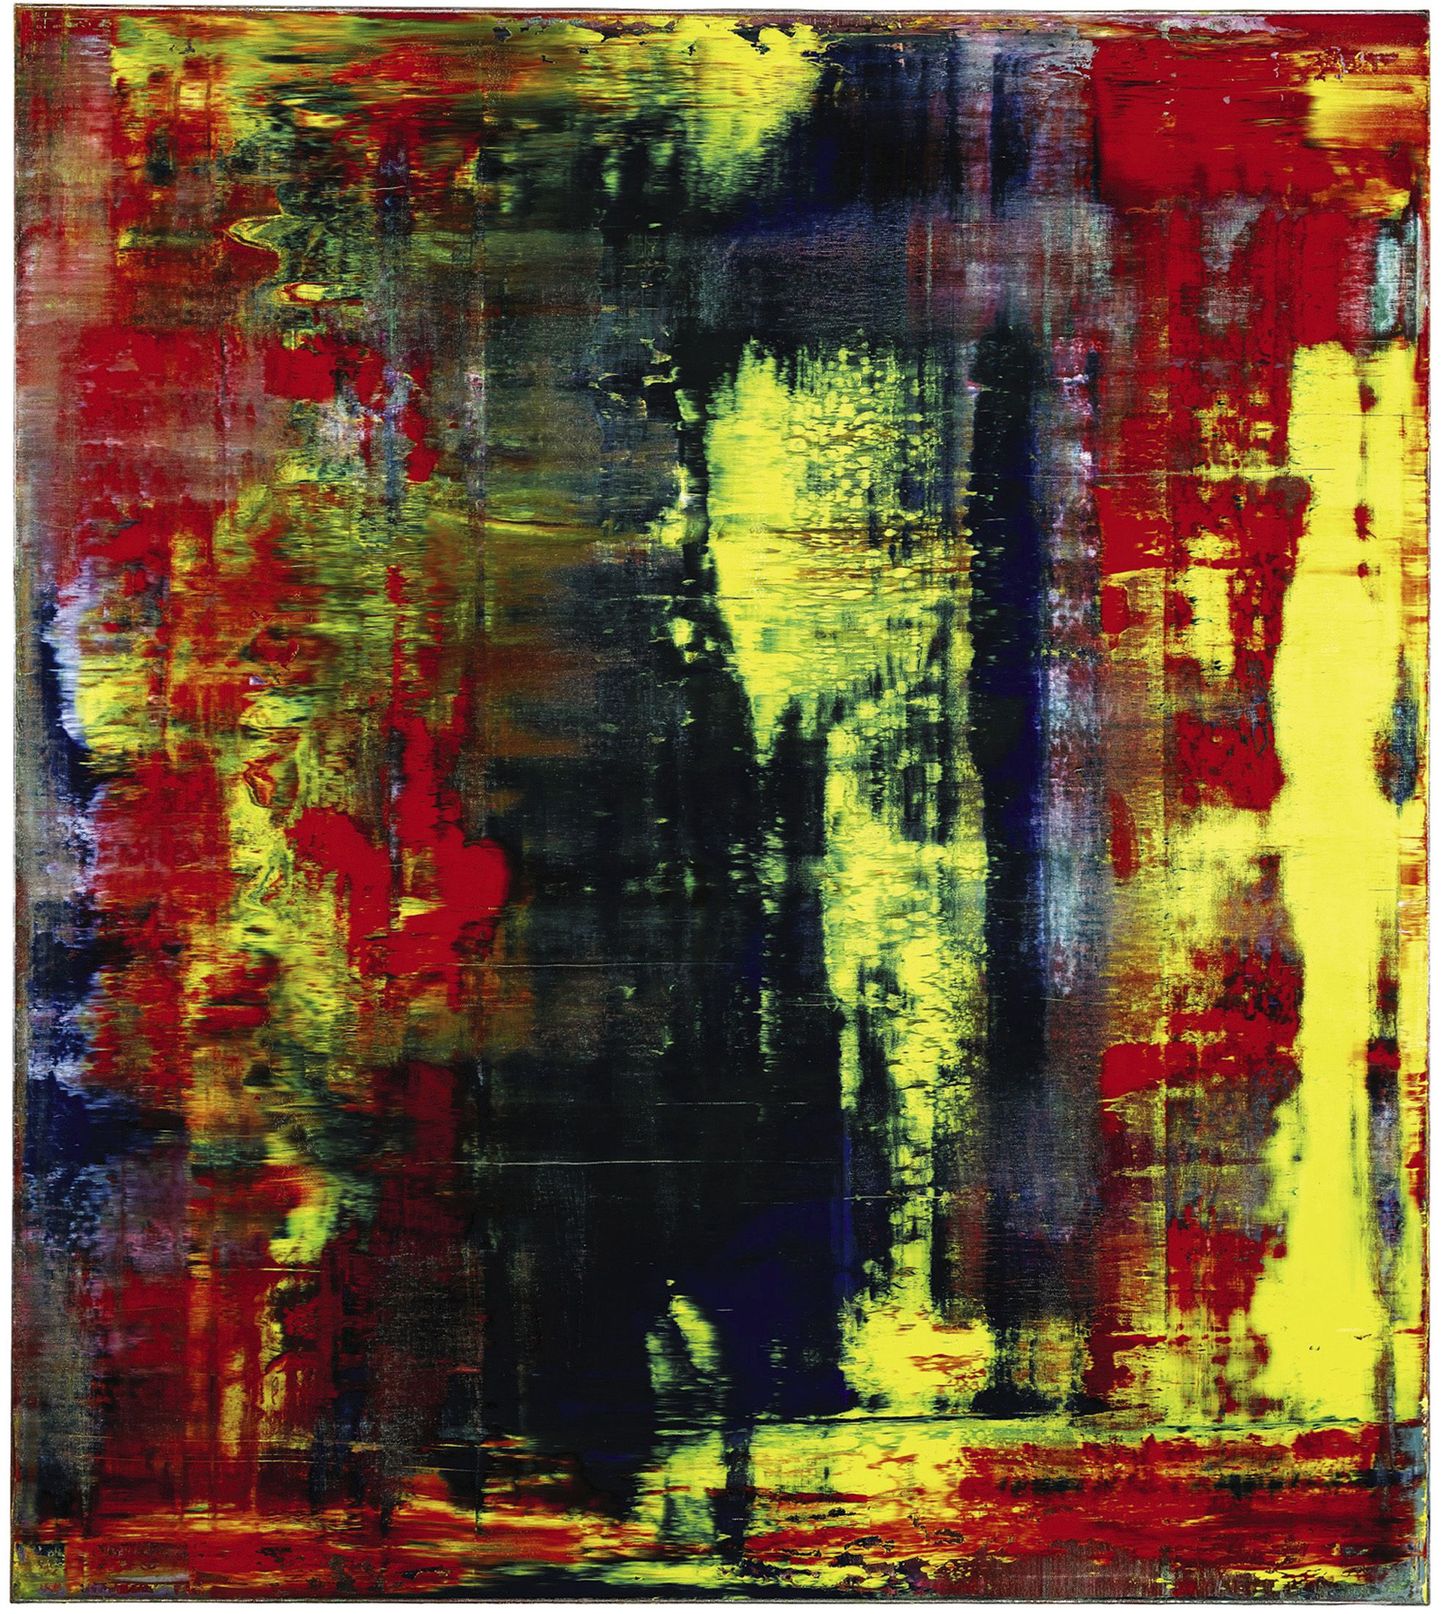 Gerhard Richteri maal "Abstraktes Bild"